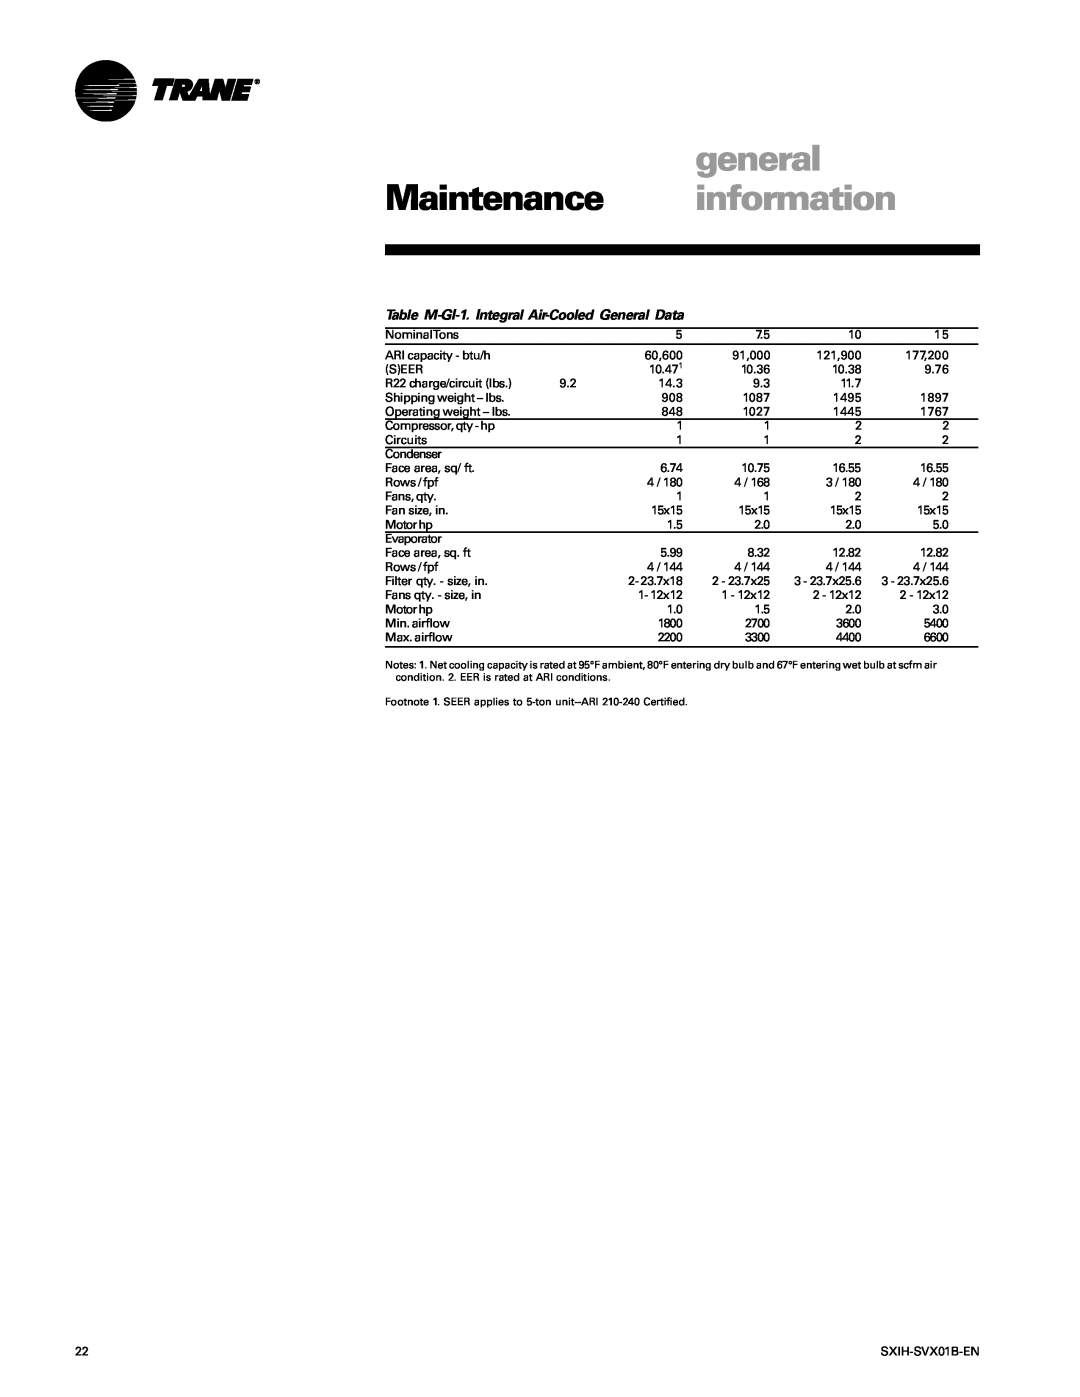 Trane SCIH manual Maintenance information, general, Table M-GI-1.Integral Air-CooledGeneral Data 